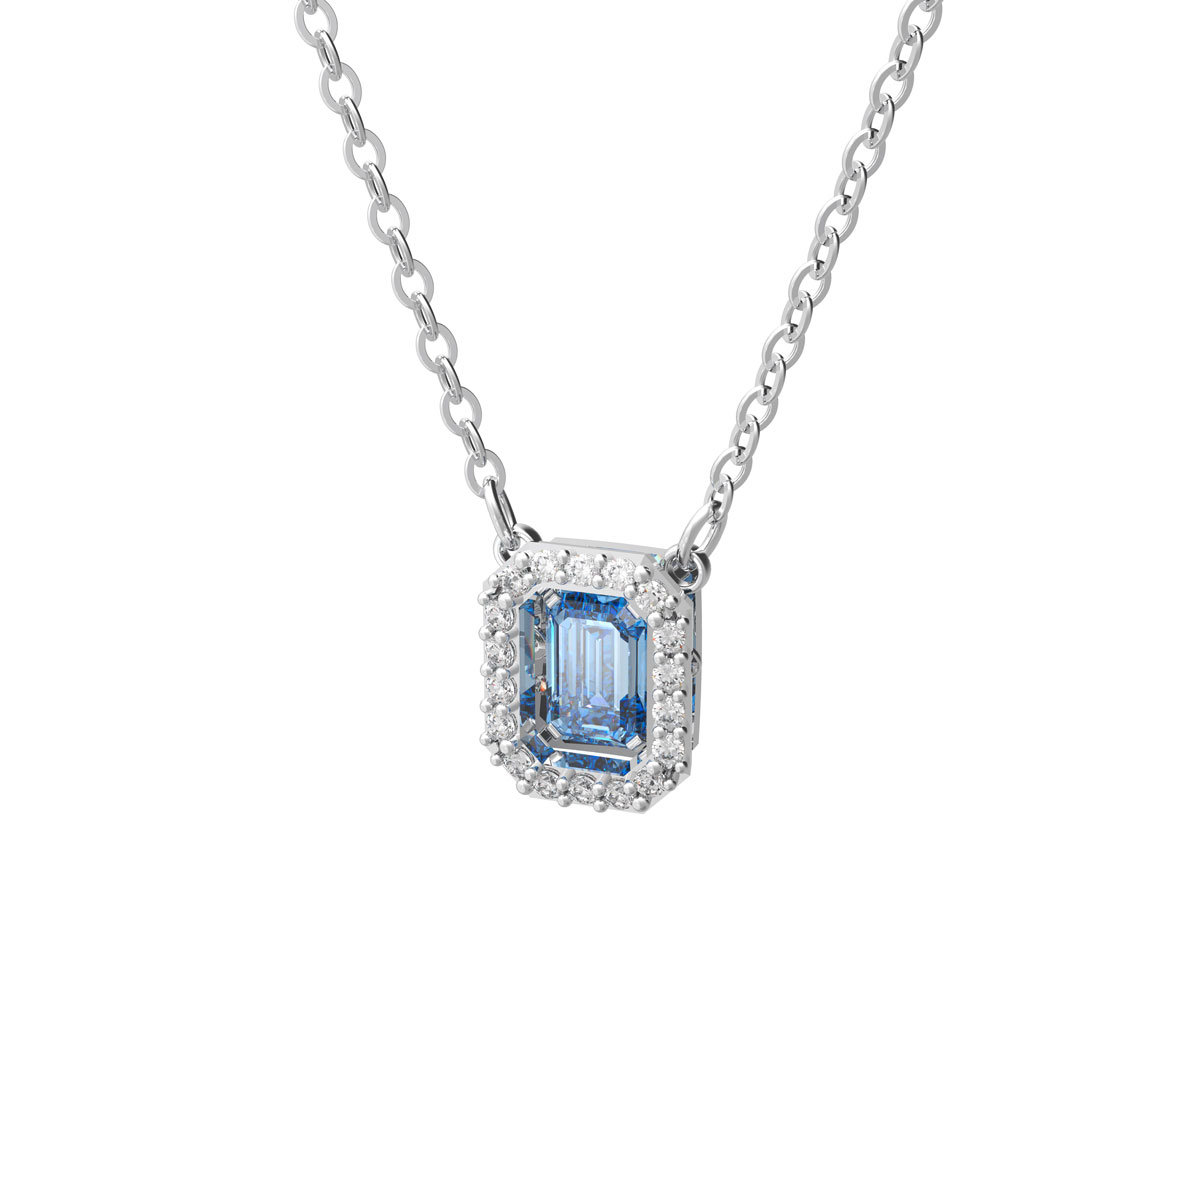 Swarovski Octagon Cut Zirconia Blue Crystal and Rhodium Millenia Pendant Necklace